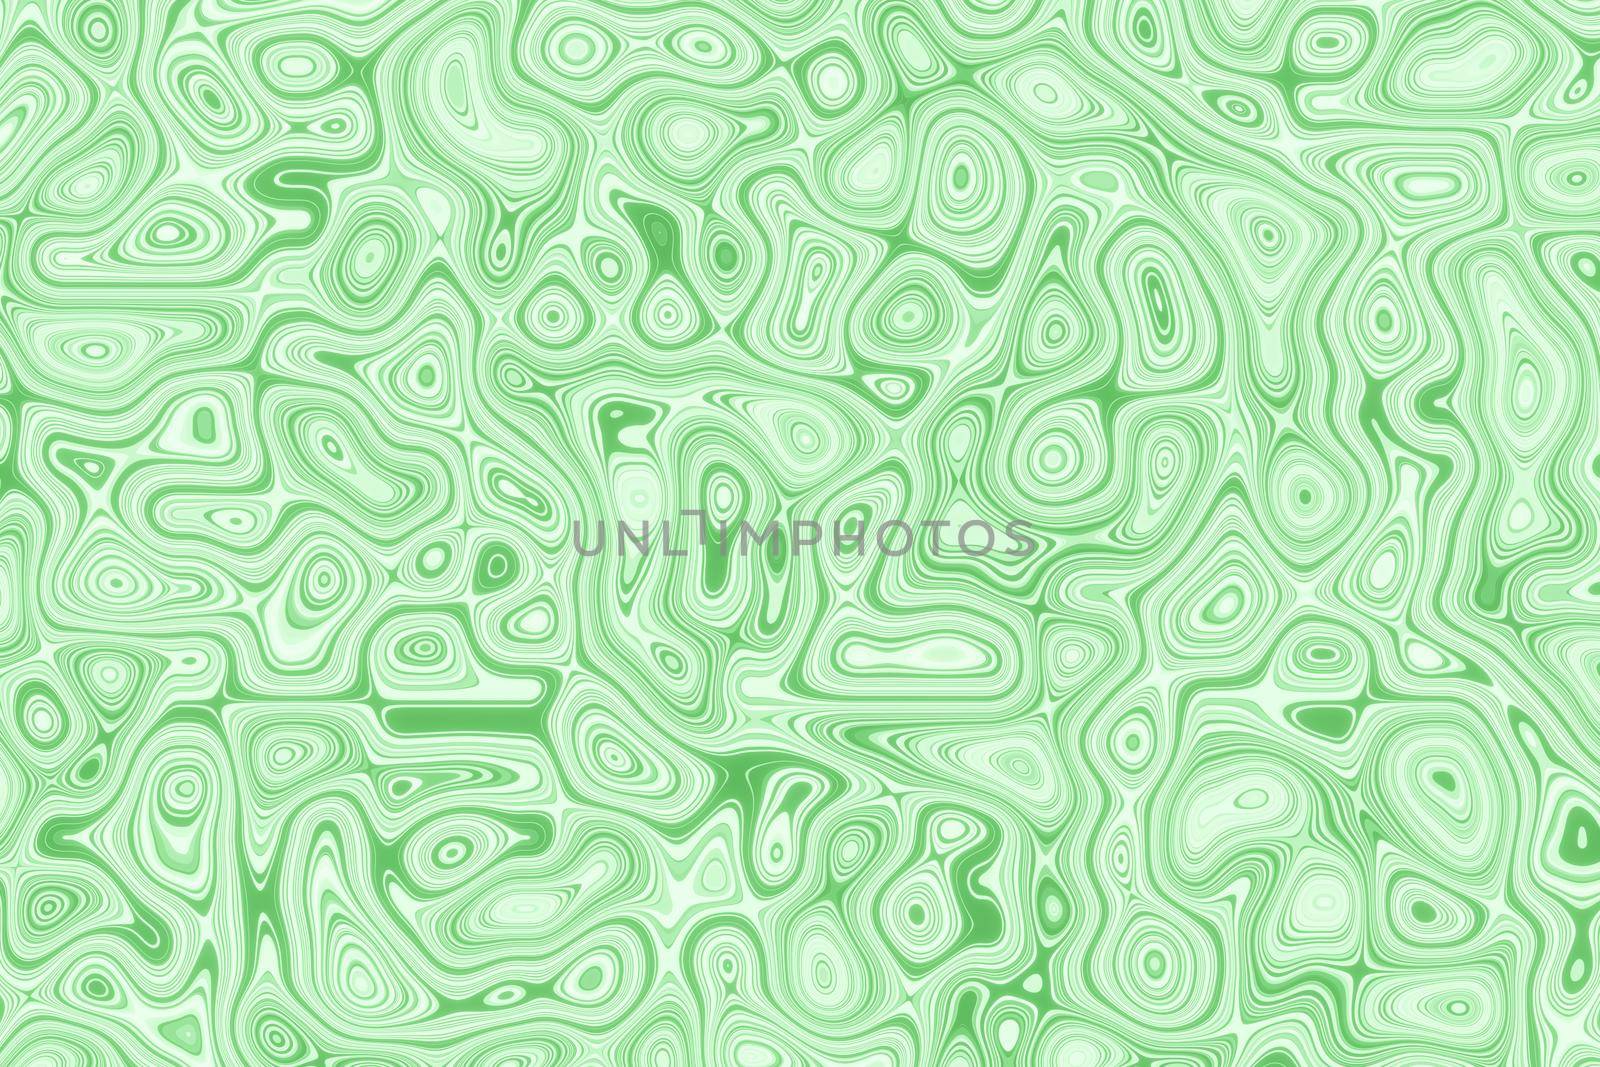 Surreal psycho jelly organism skin seamless seamless wallpaper. by raferto1973